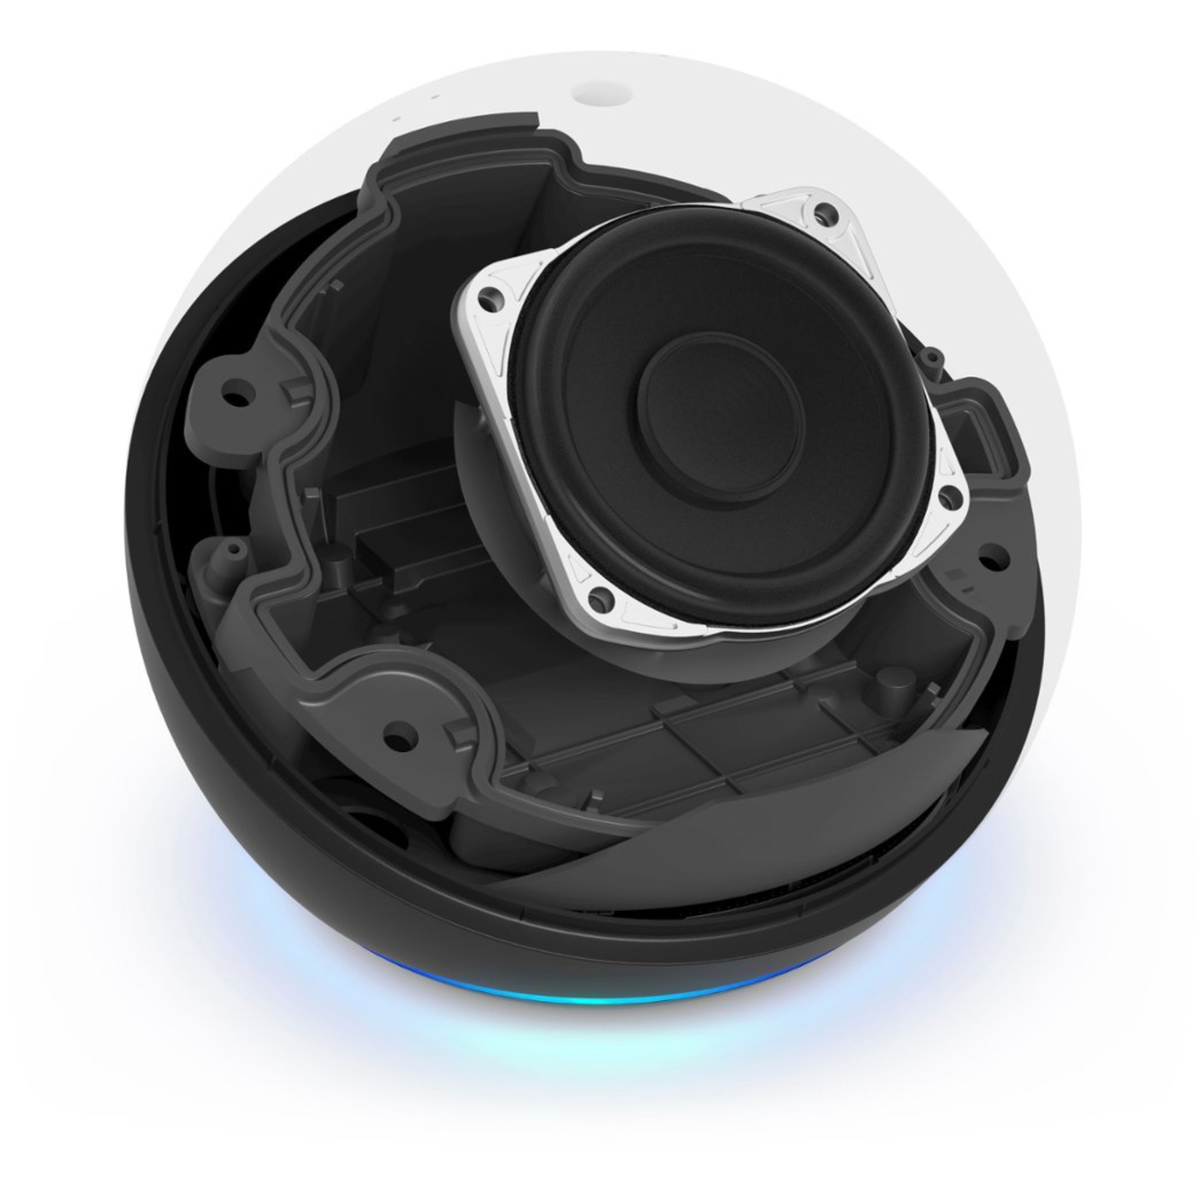 Amazon Eco Dot 5th Generation Speaker, Black